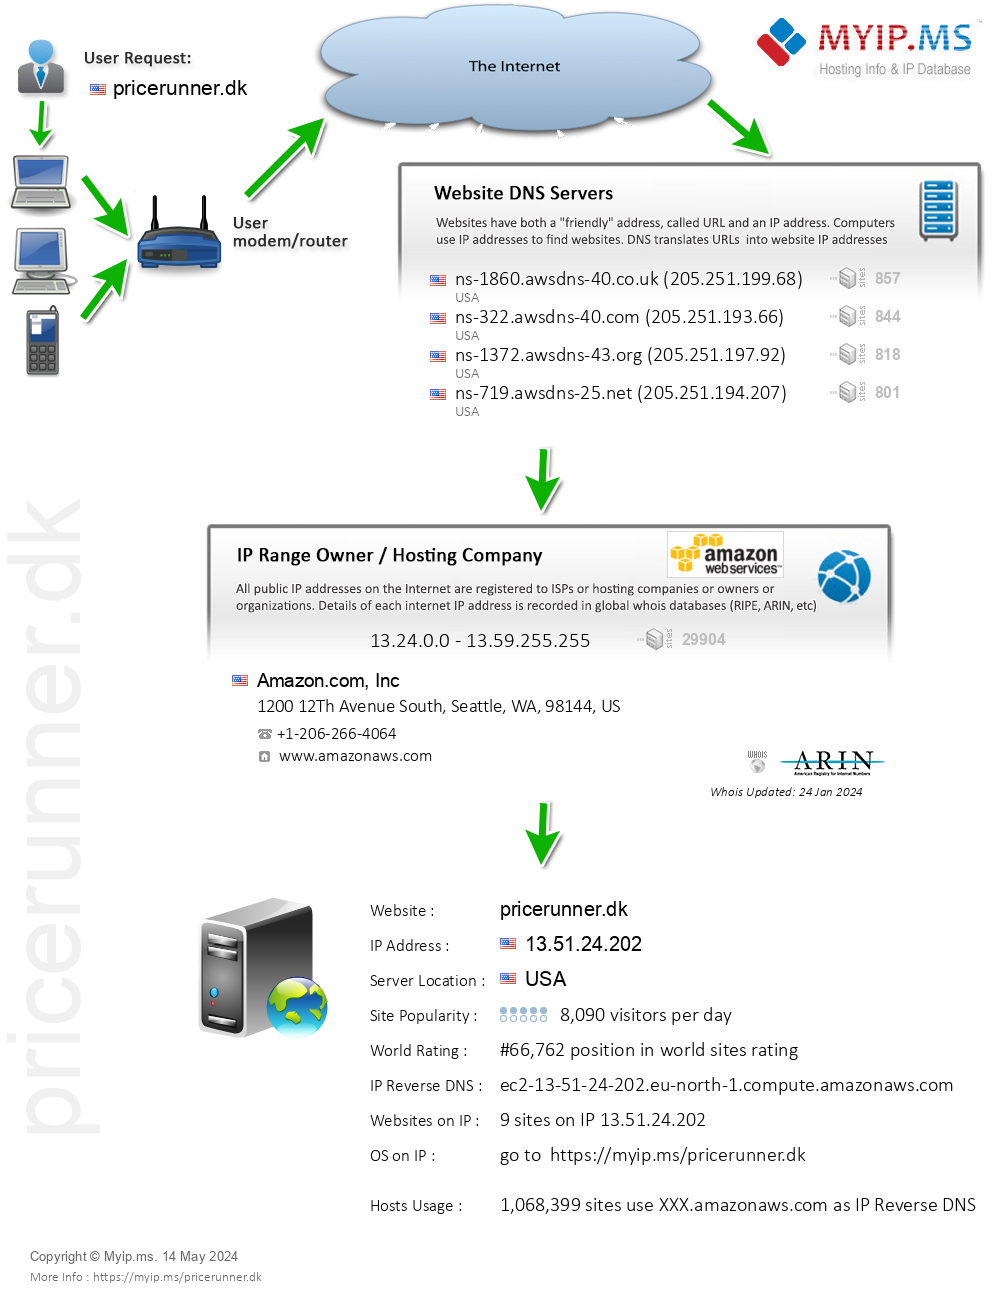 Pricerunner.dk - Website Hosting Visual IP Diagram